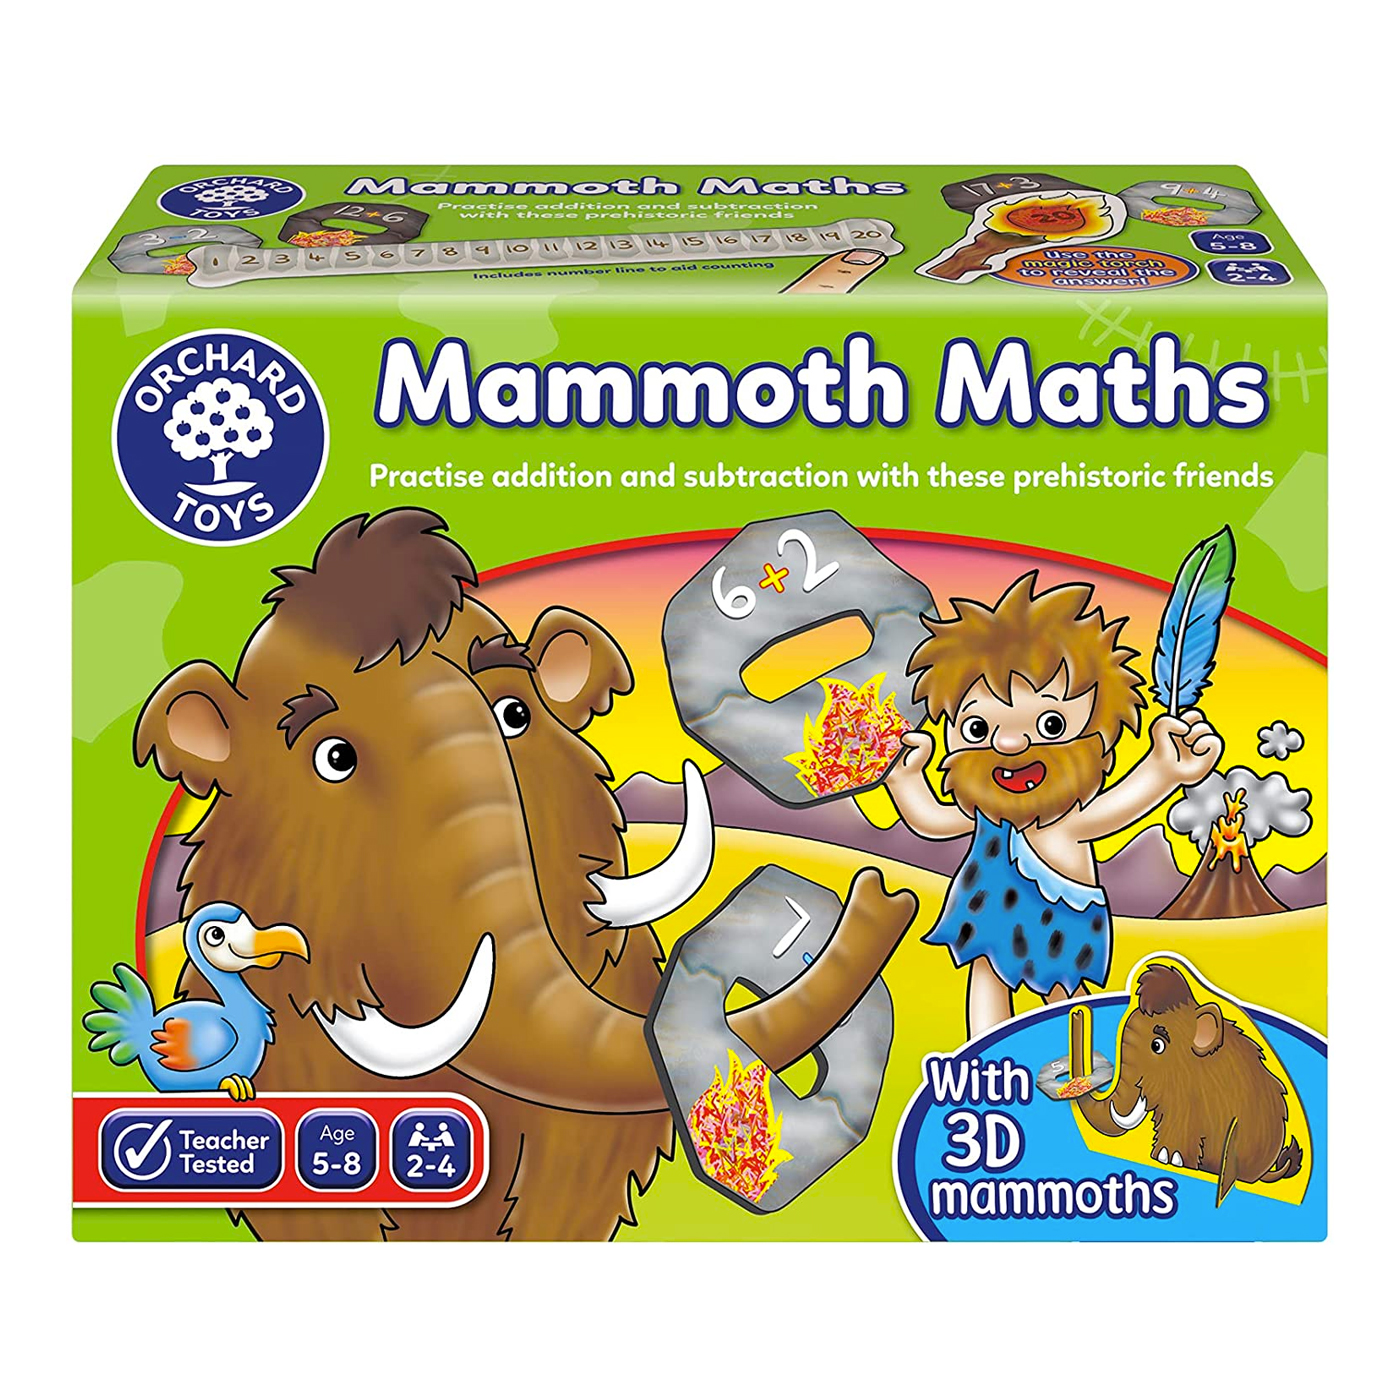  Orchard Toys Mammouth Maths